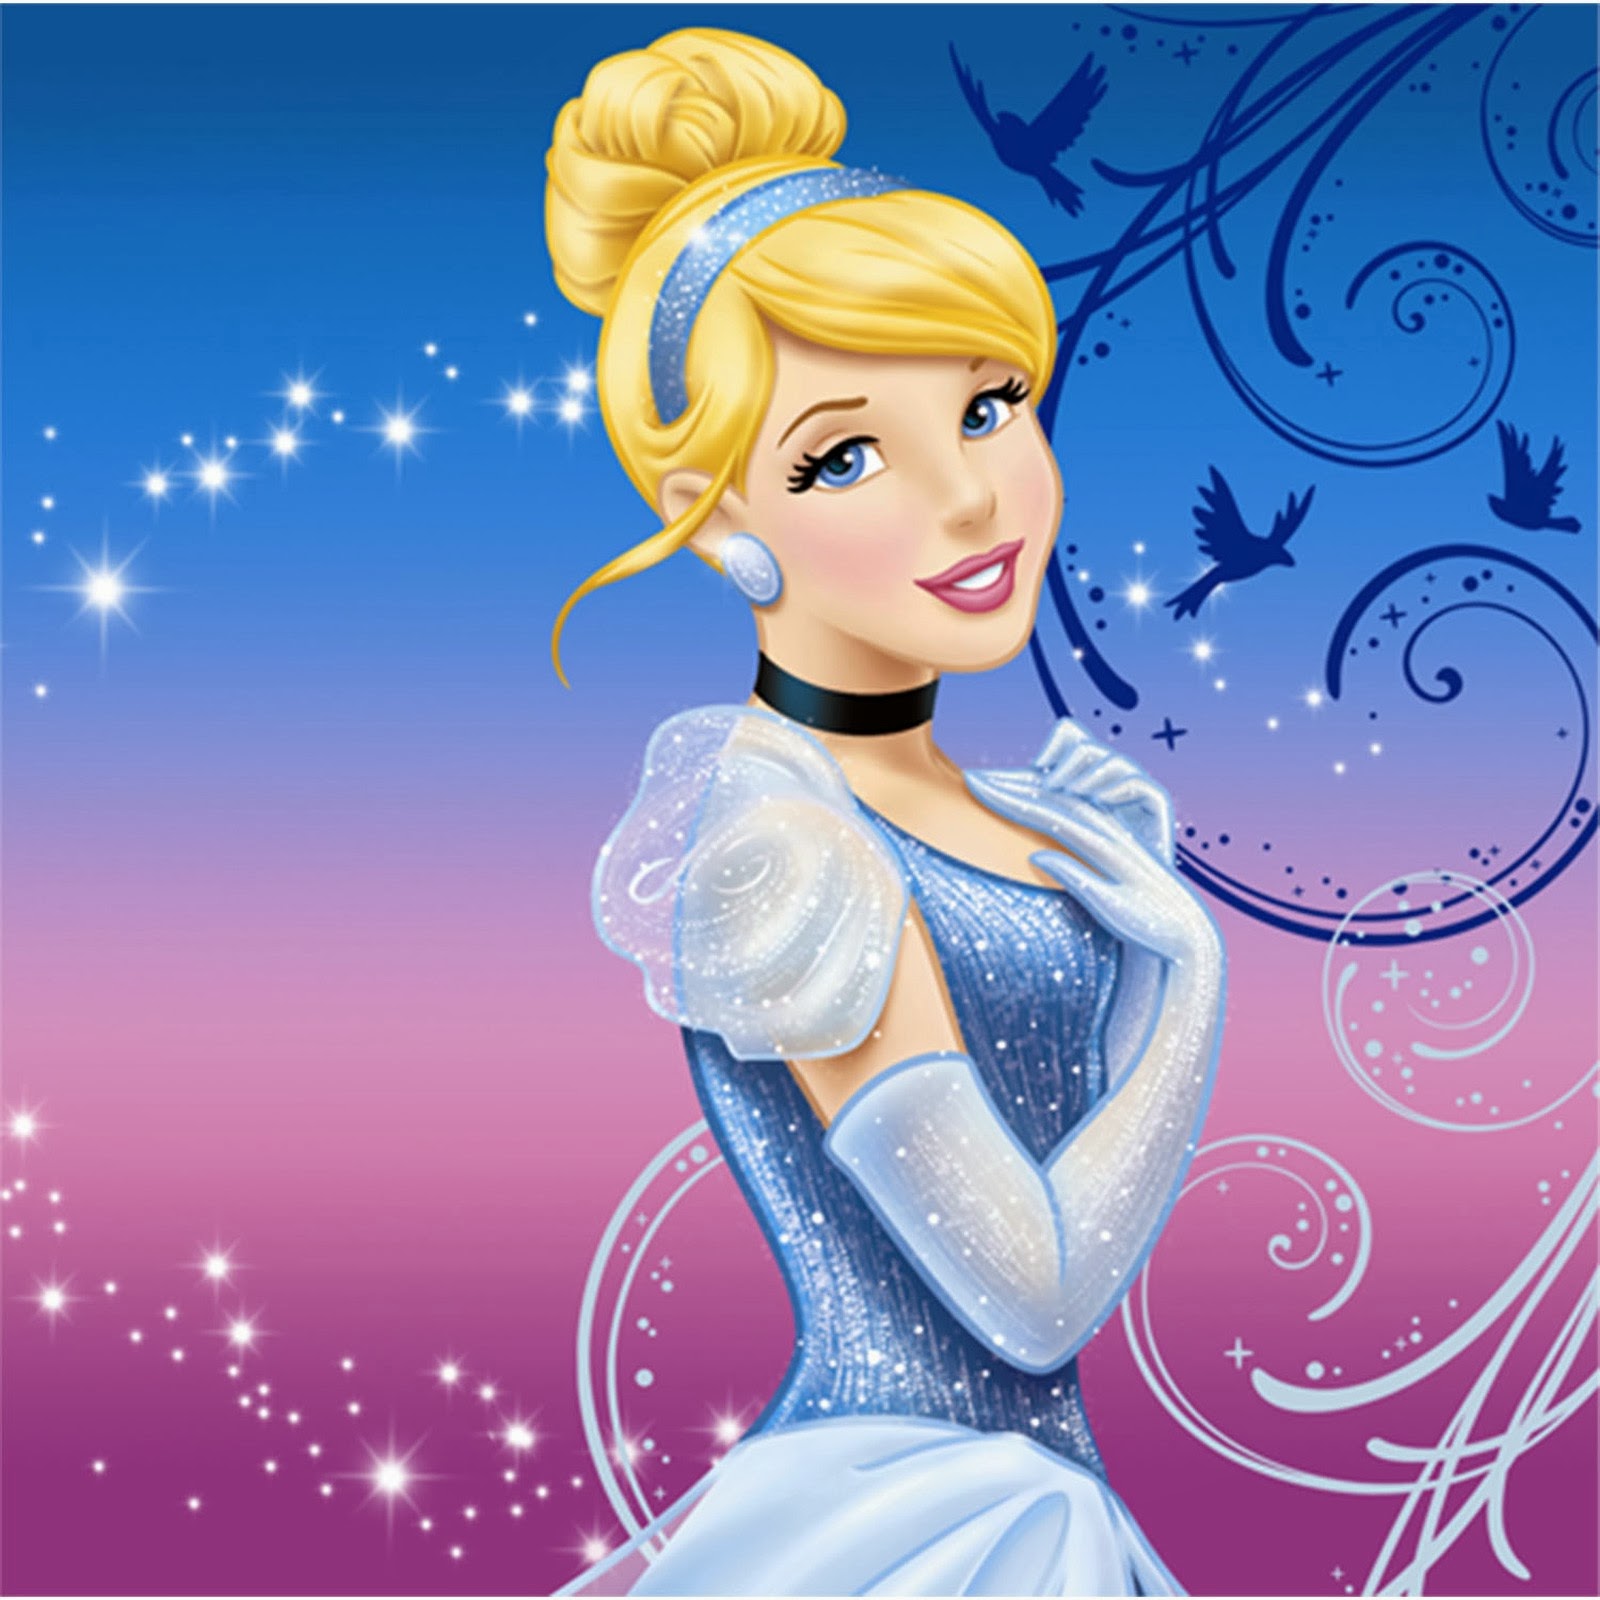 Amazing Cinderella Pictures & Backgrounds